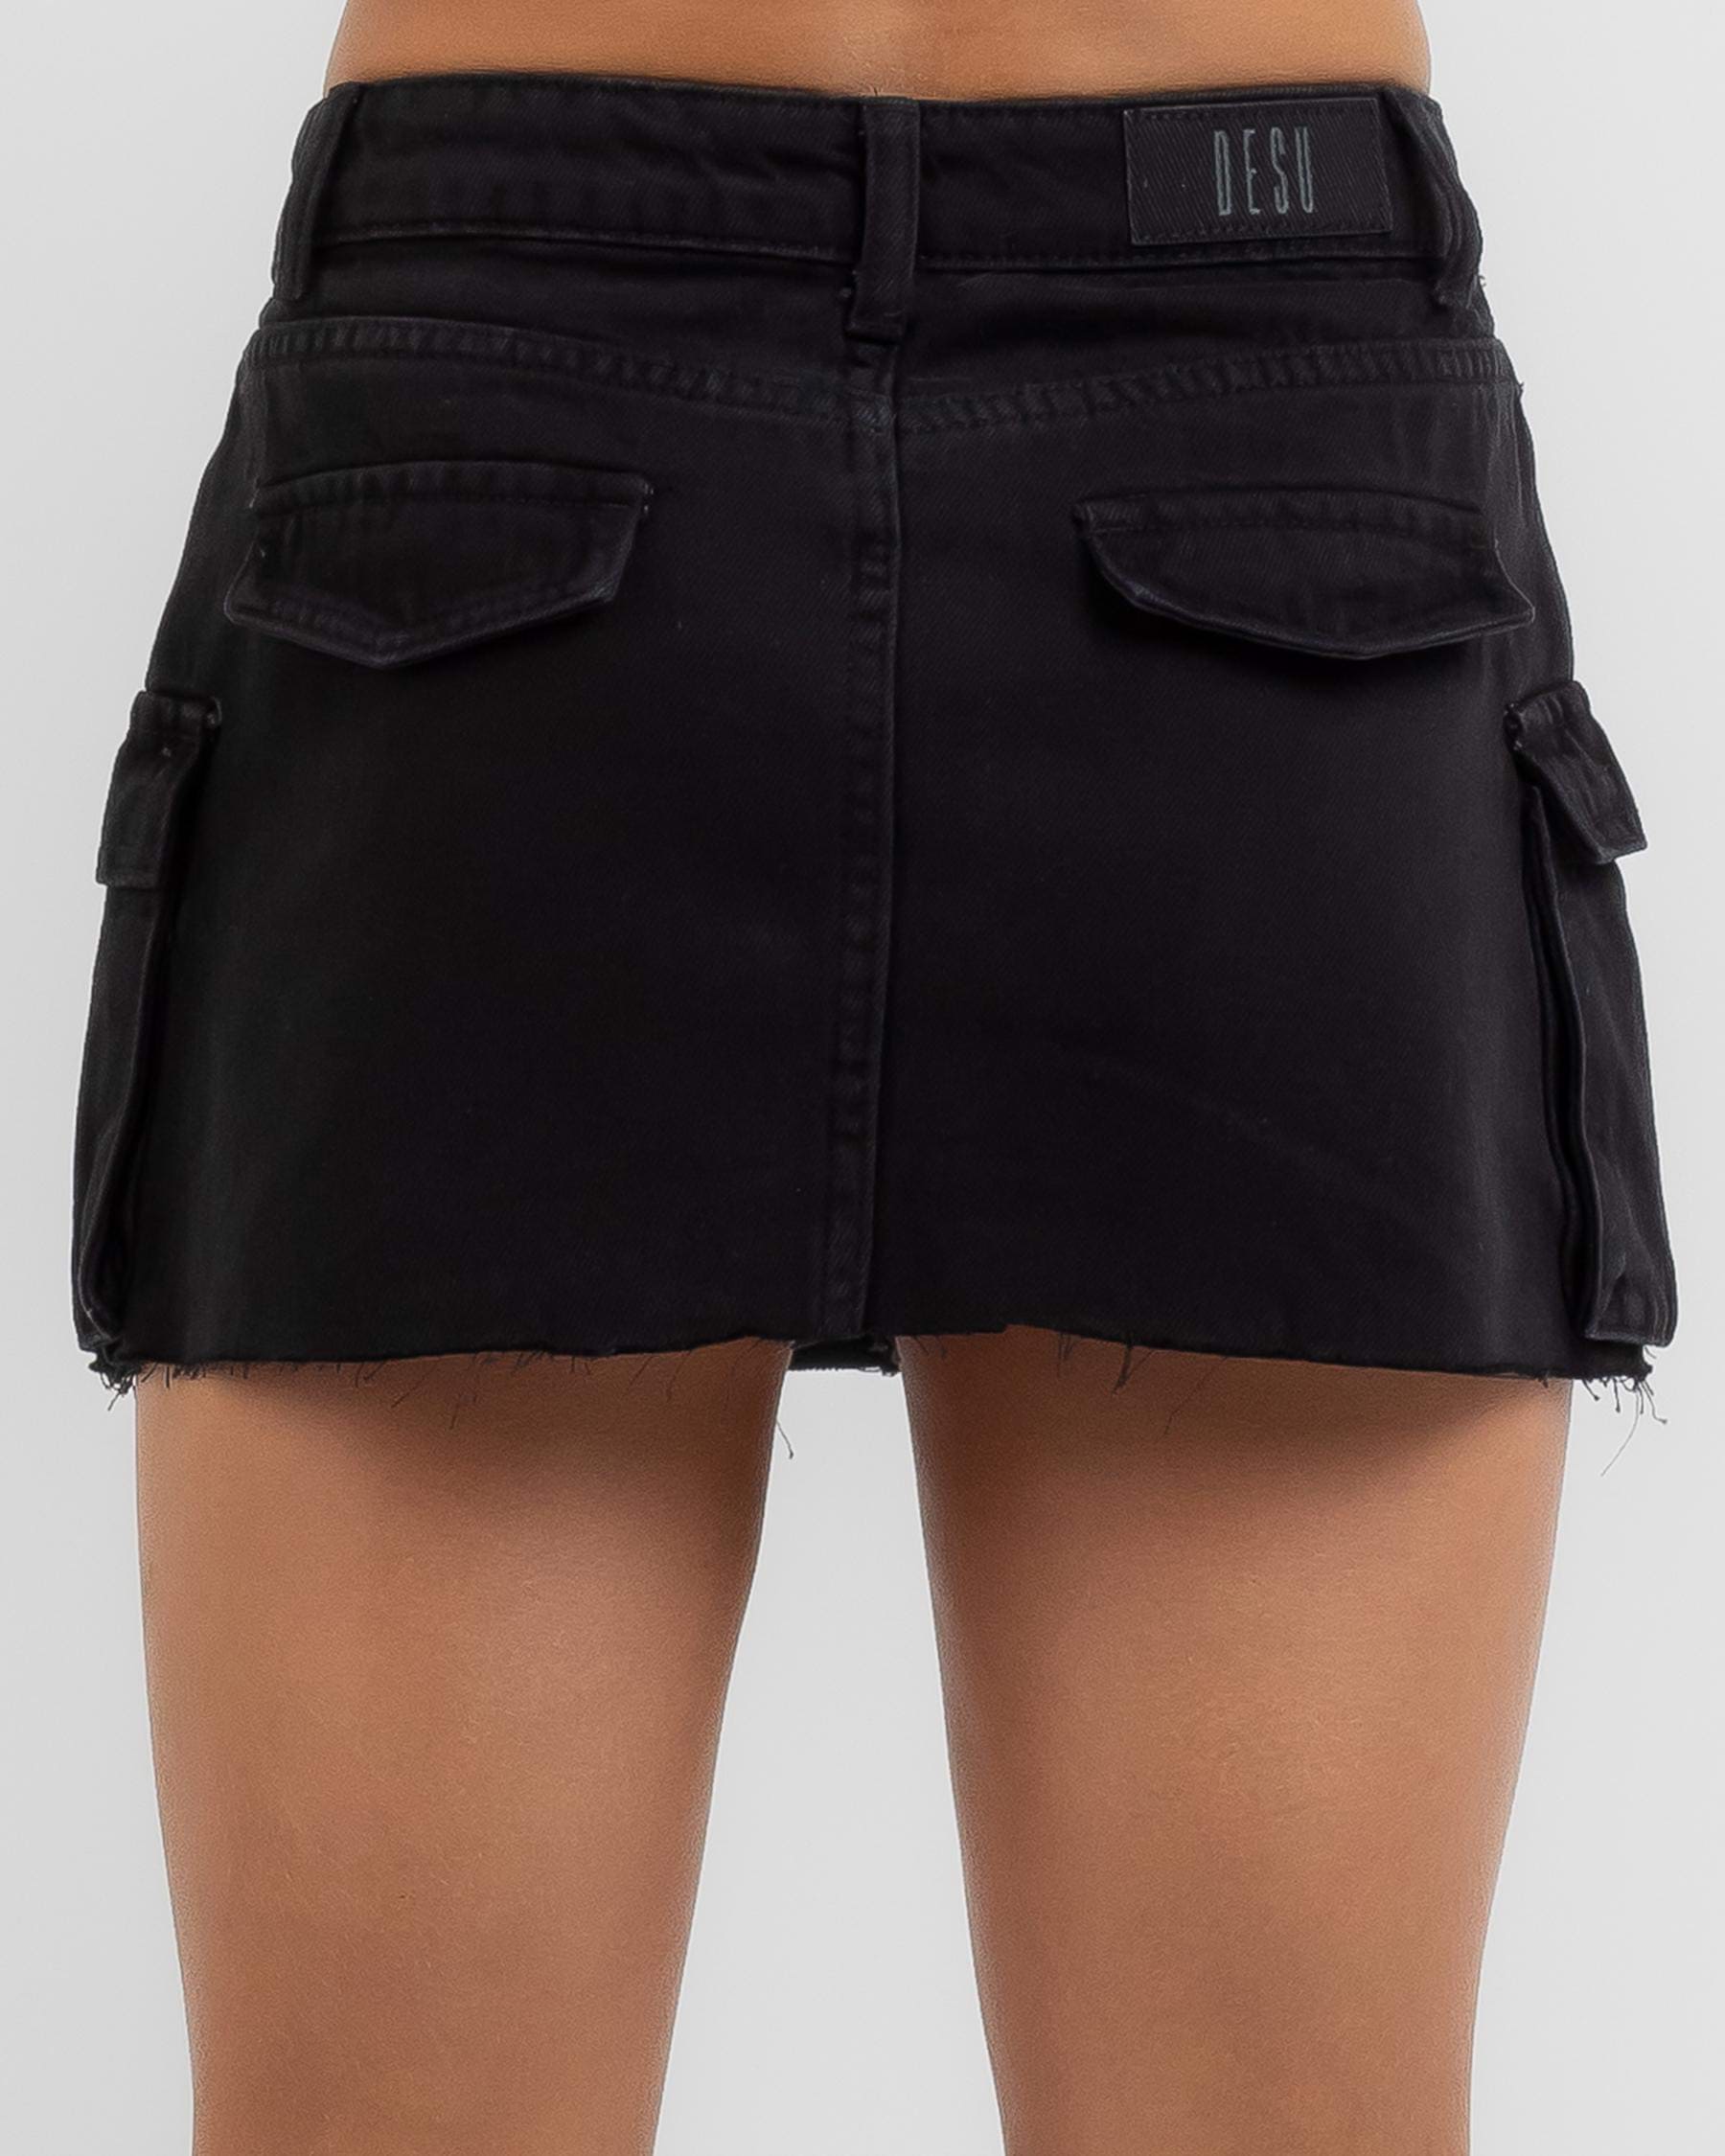 DESU Girls' Cargo Mini Skirt In Washed Black - Fast Shipping & Easy ...